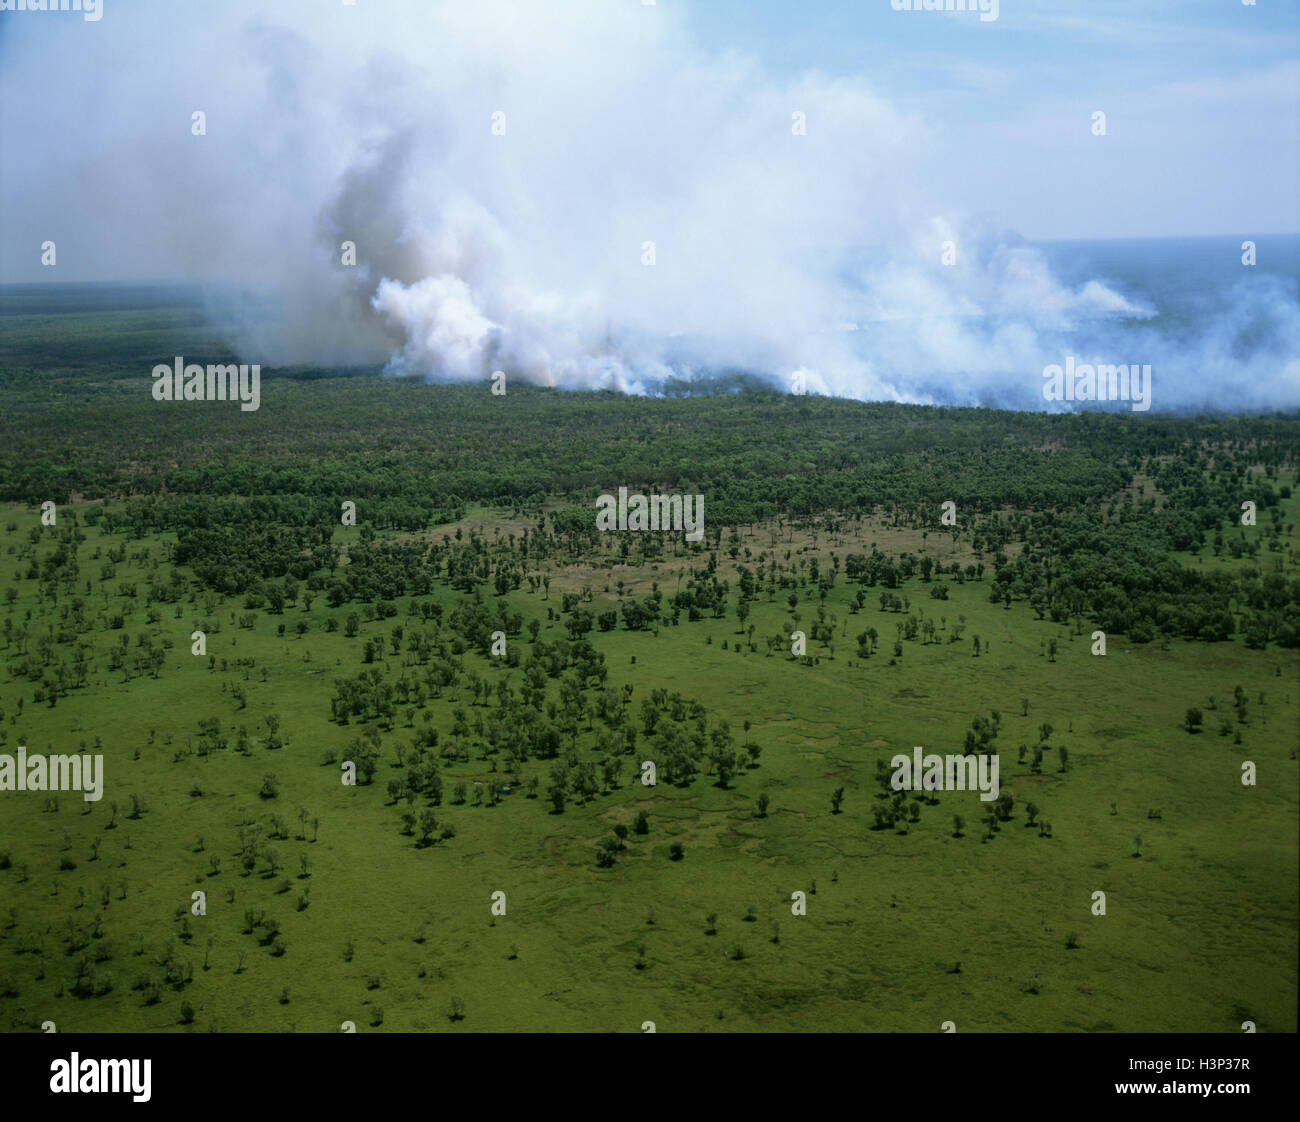 Bushfire lit by Aborigines during the dry season Stock Photo